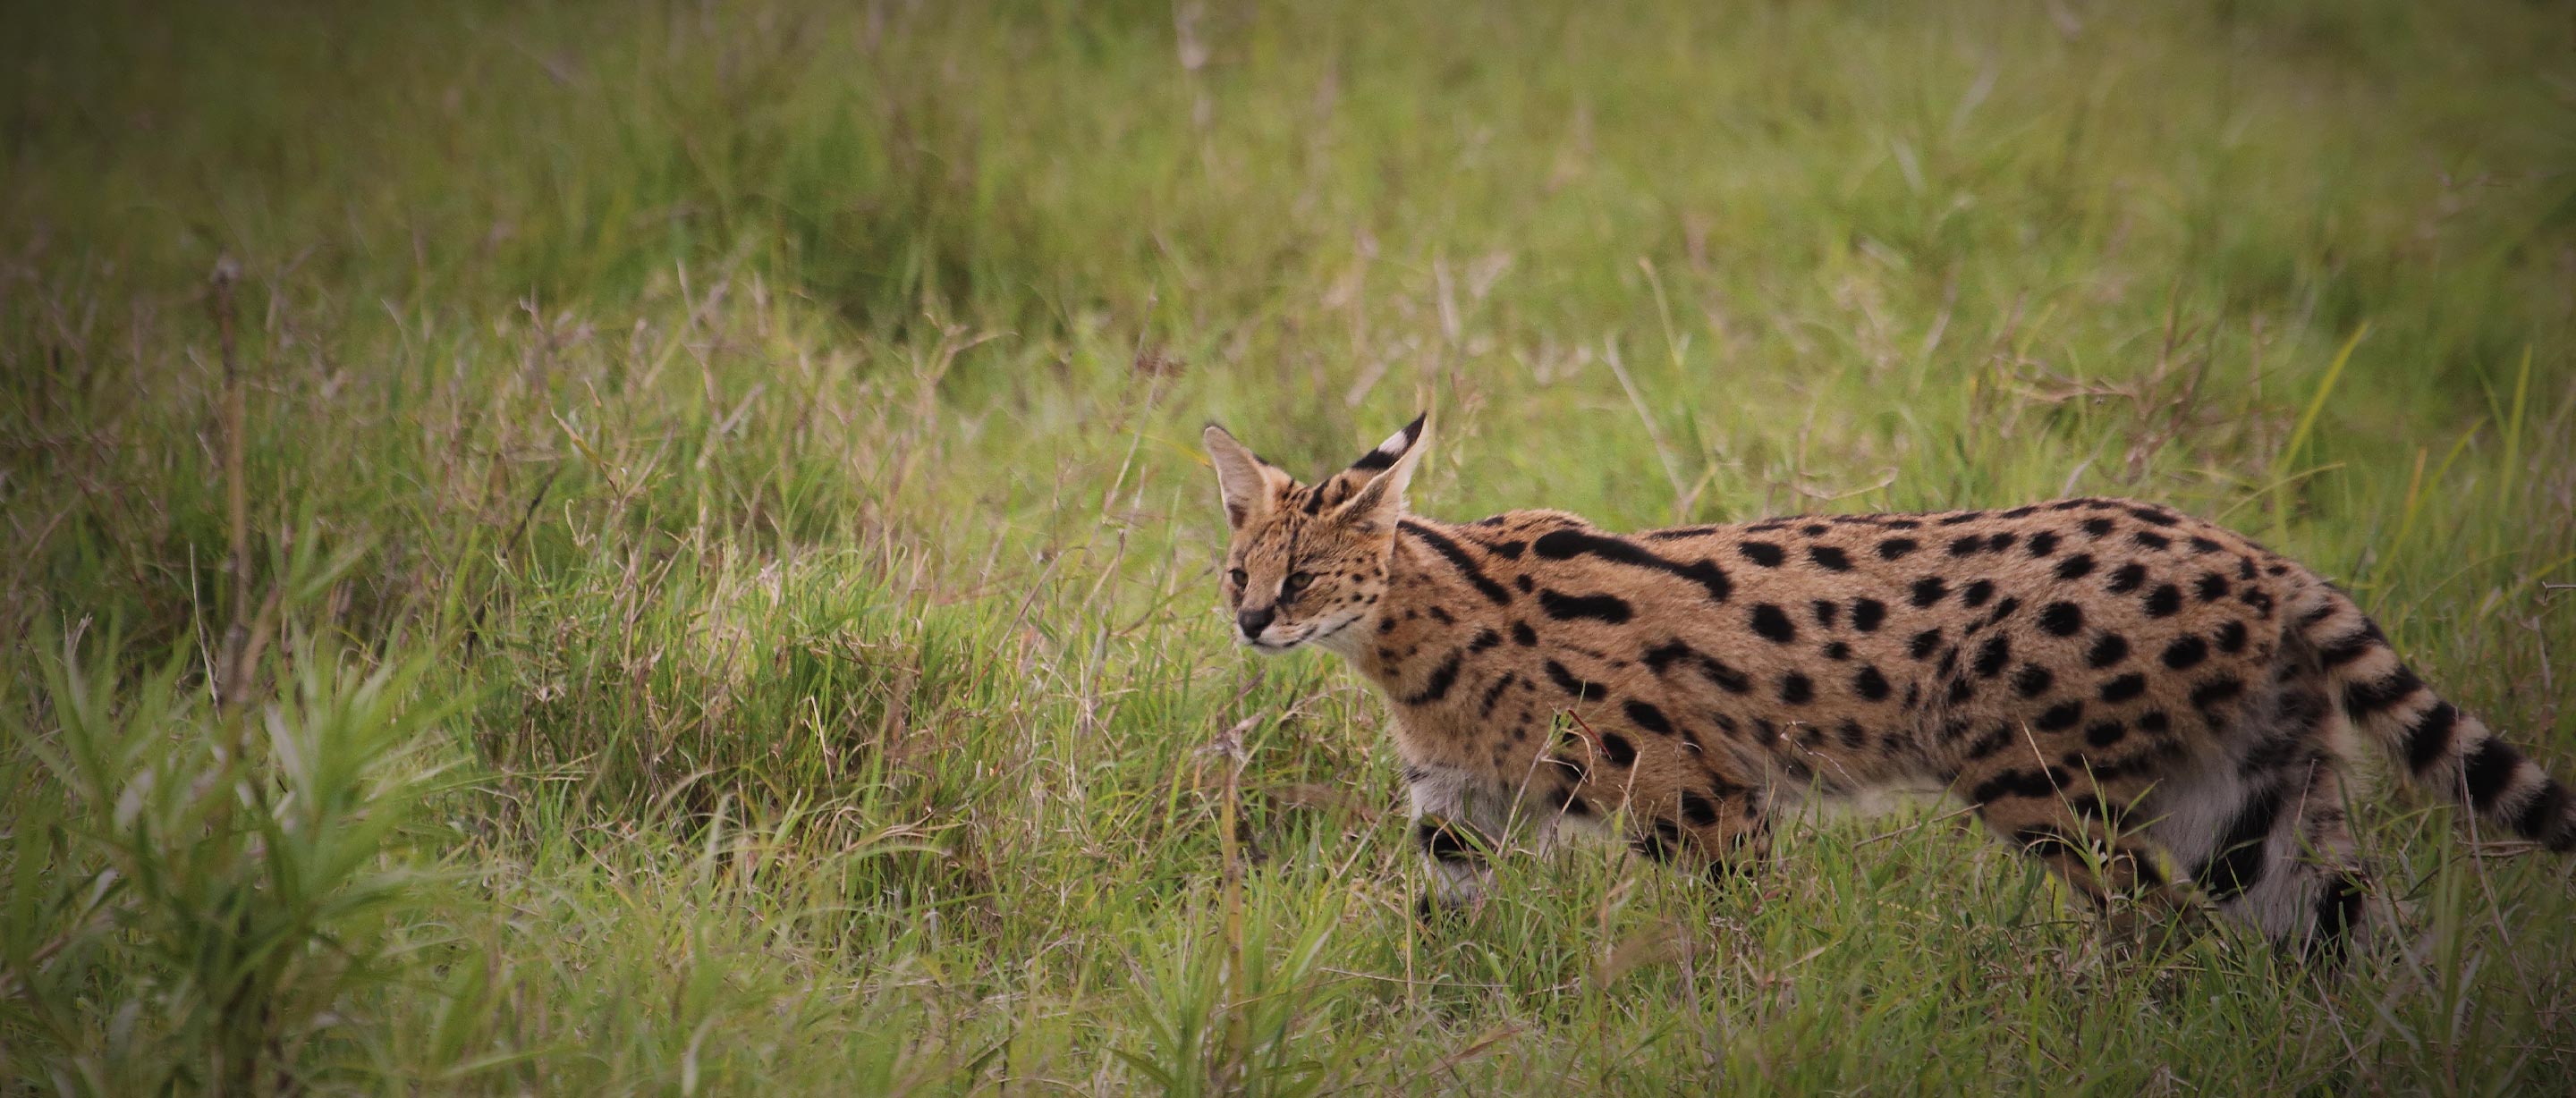 african serval cat attacks